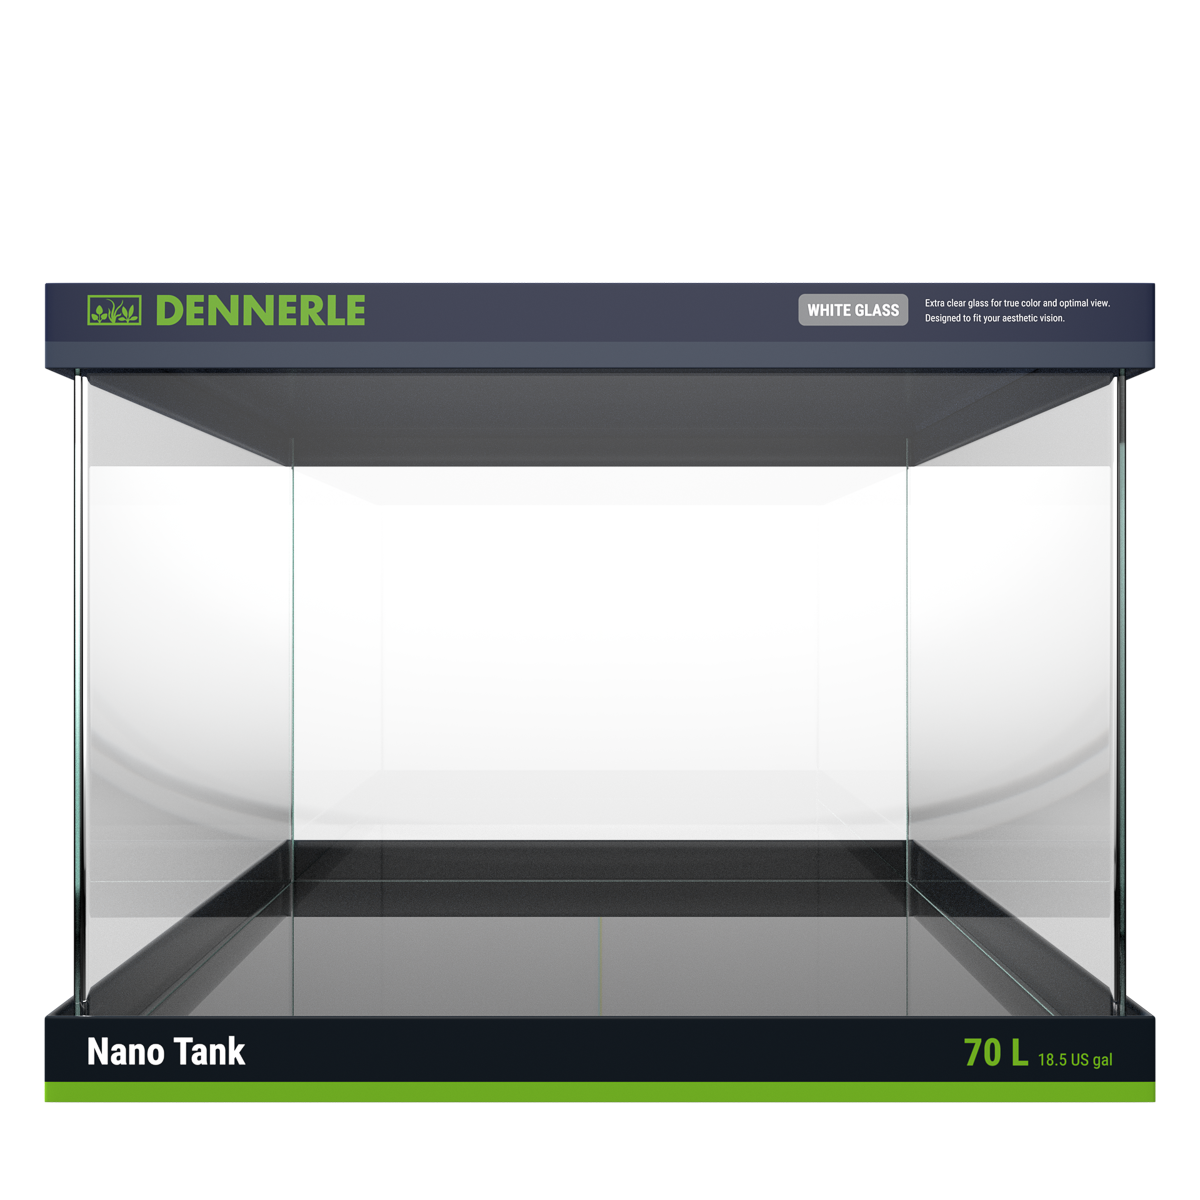 DENNERLE Nano Tank White Glass, 70L